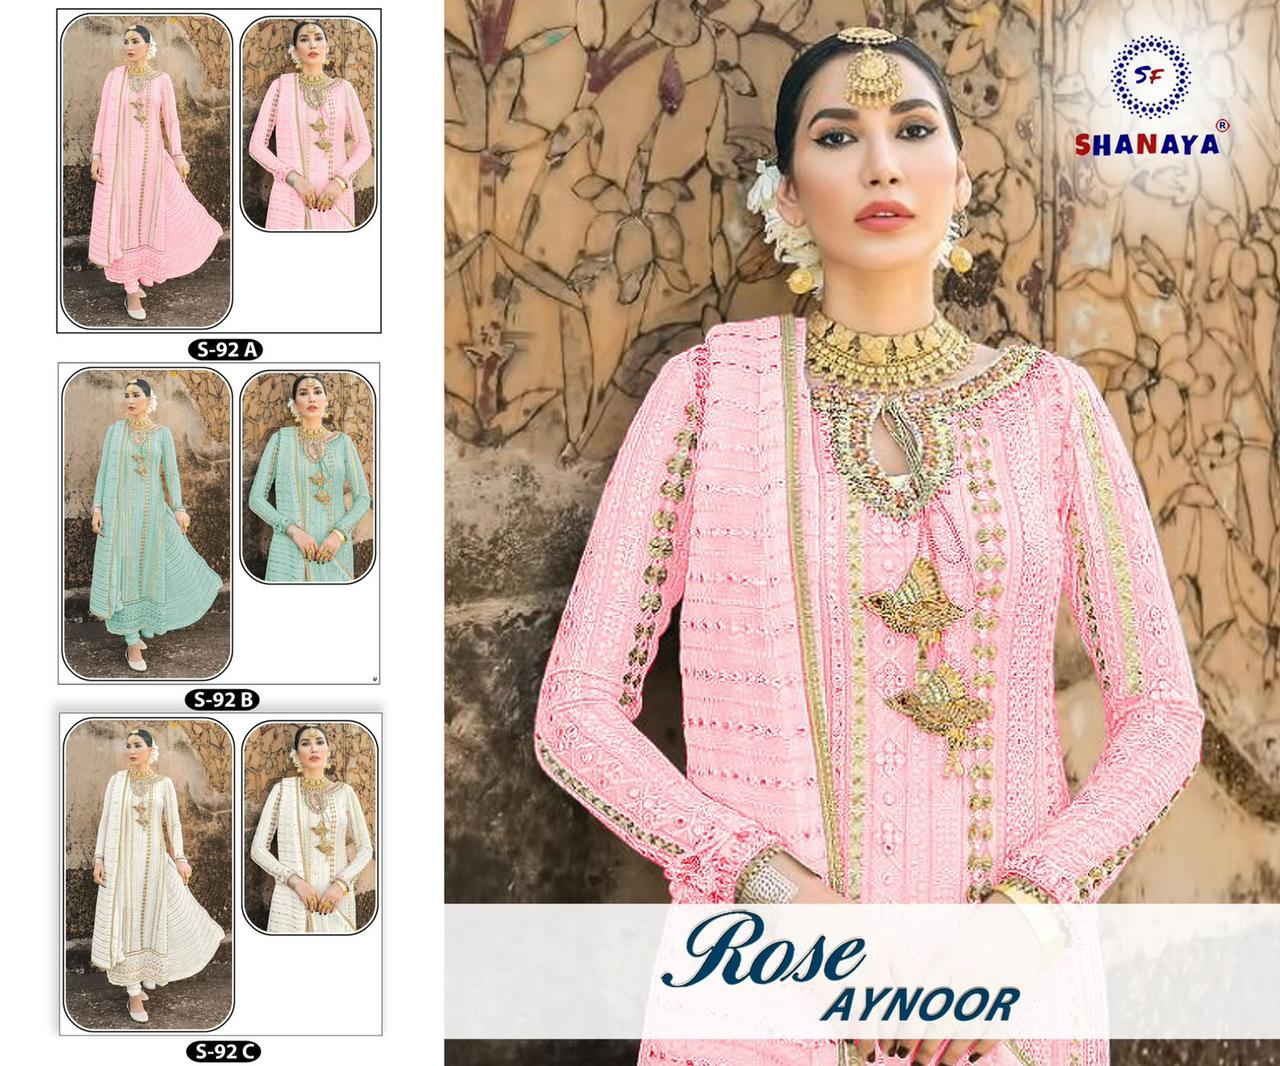 Shanaya Fashion Rose Aynoor S-92 Colors 